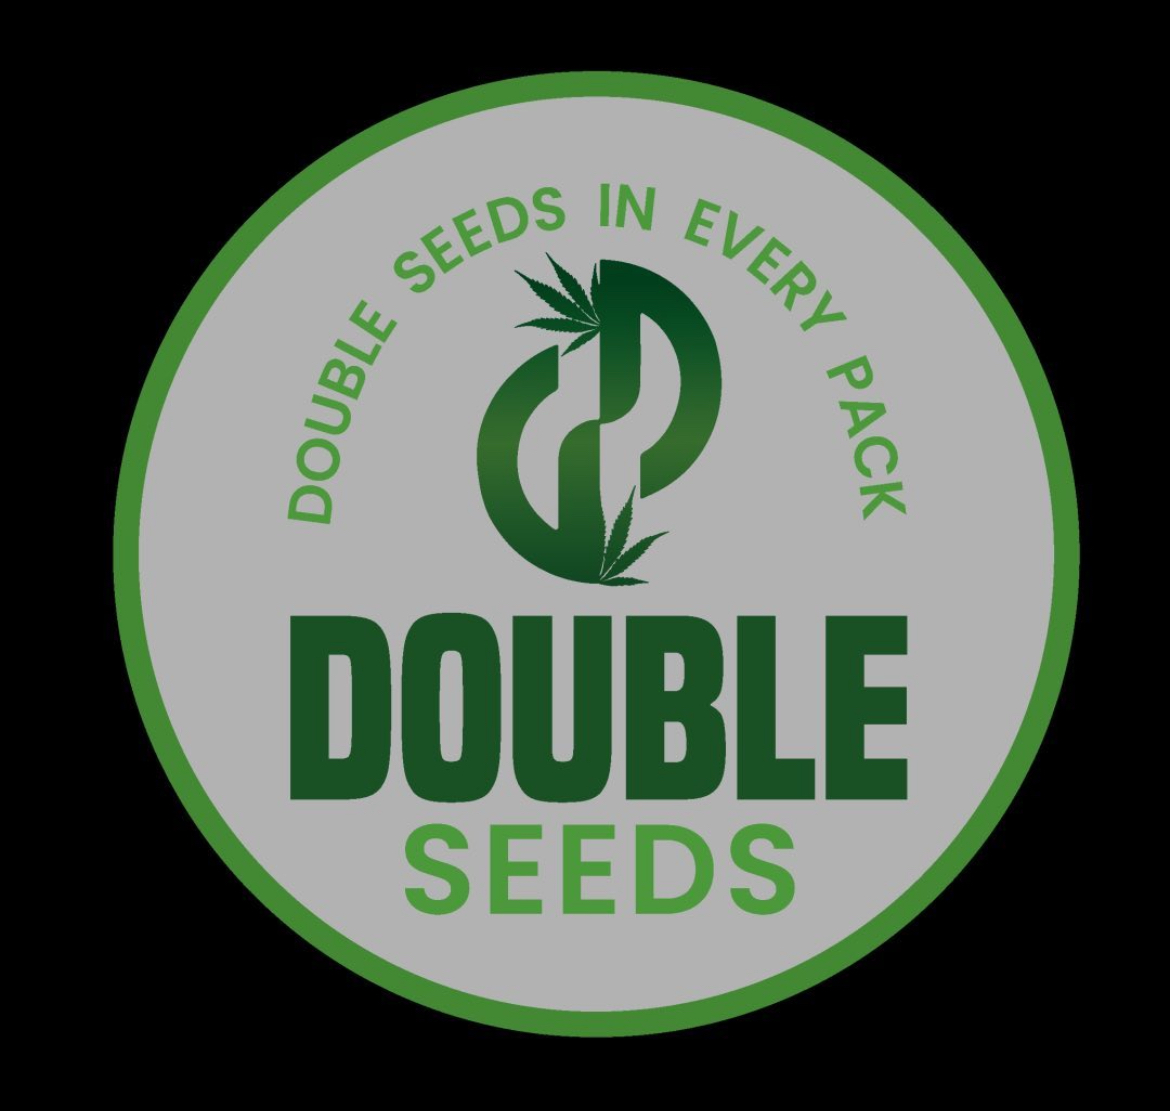 Banana Glue Cannabis Seeds - Double Seeds.